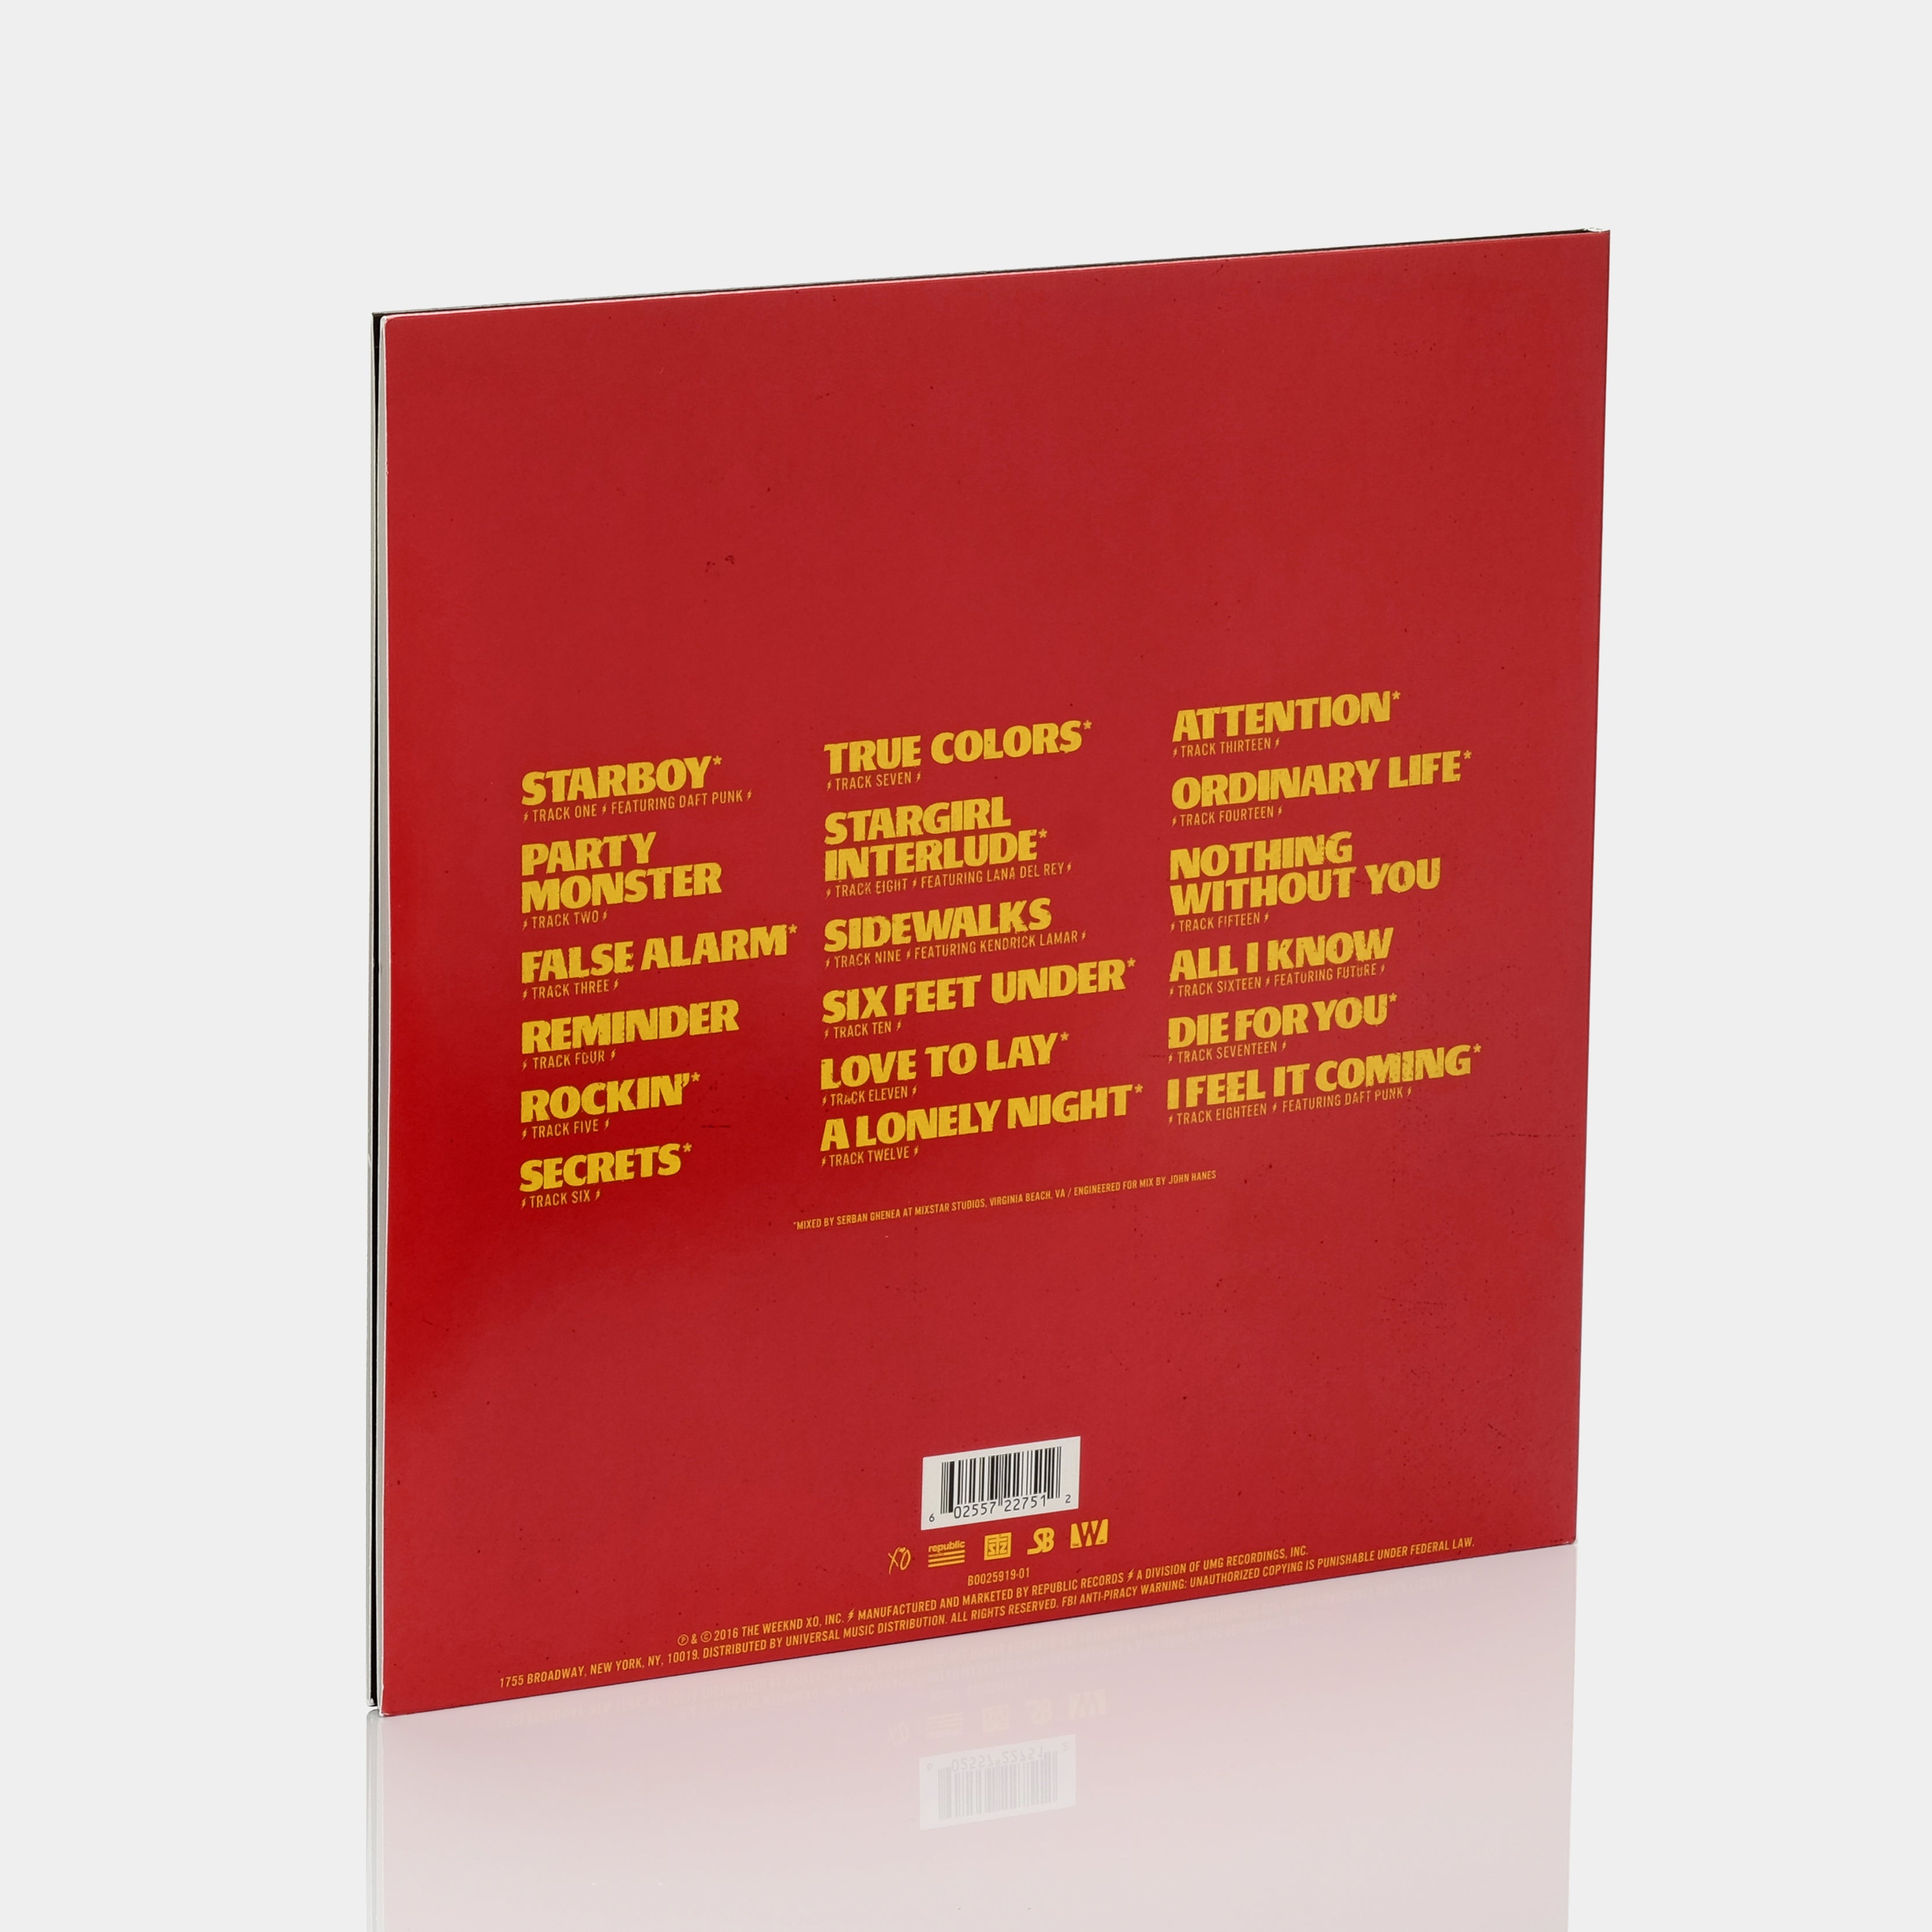 The Weeknd - Starboy 2xLP Translucent Red Vinyl Record